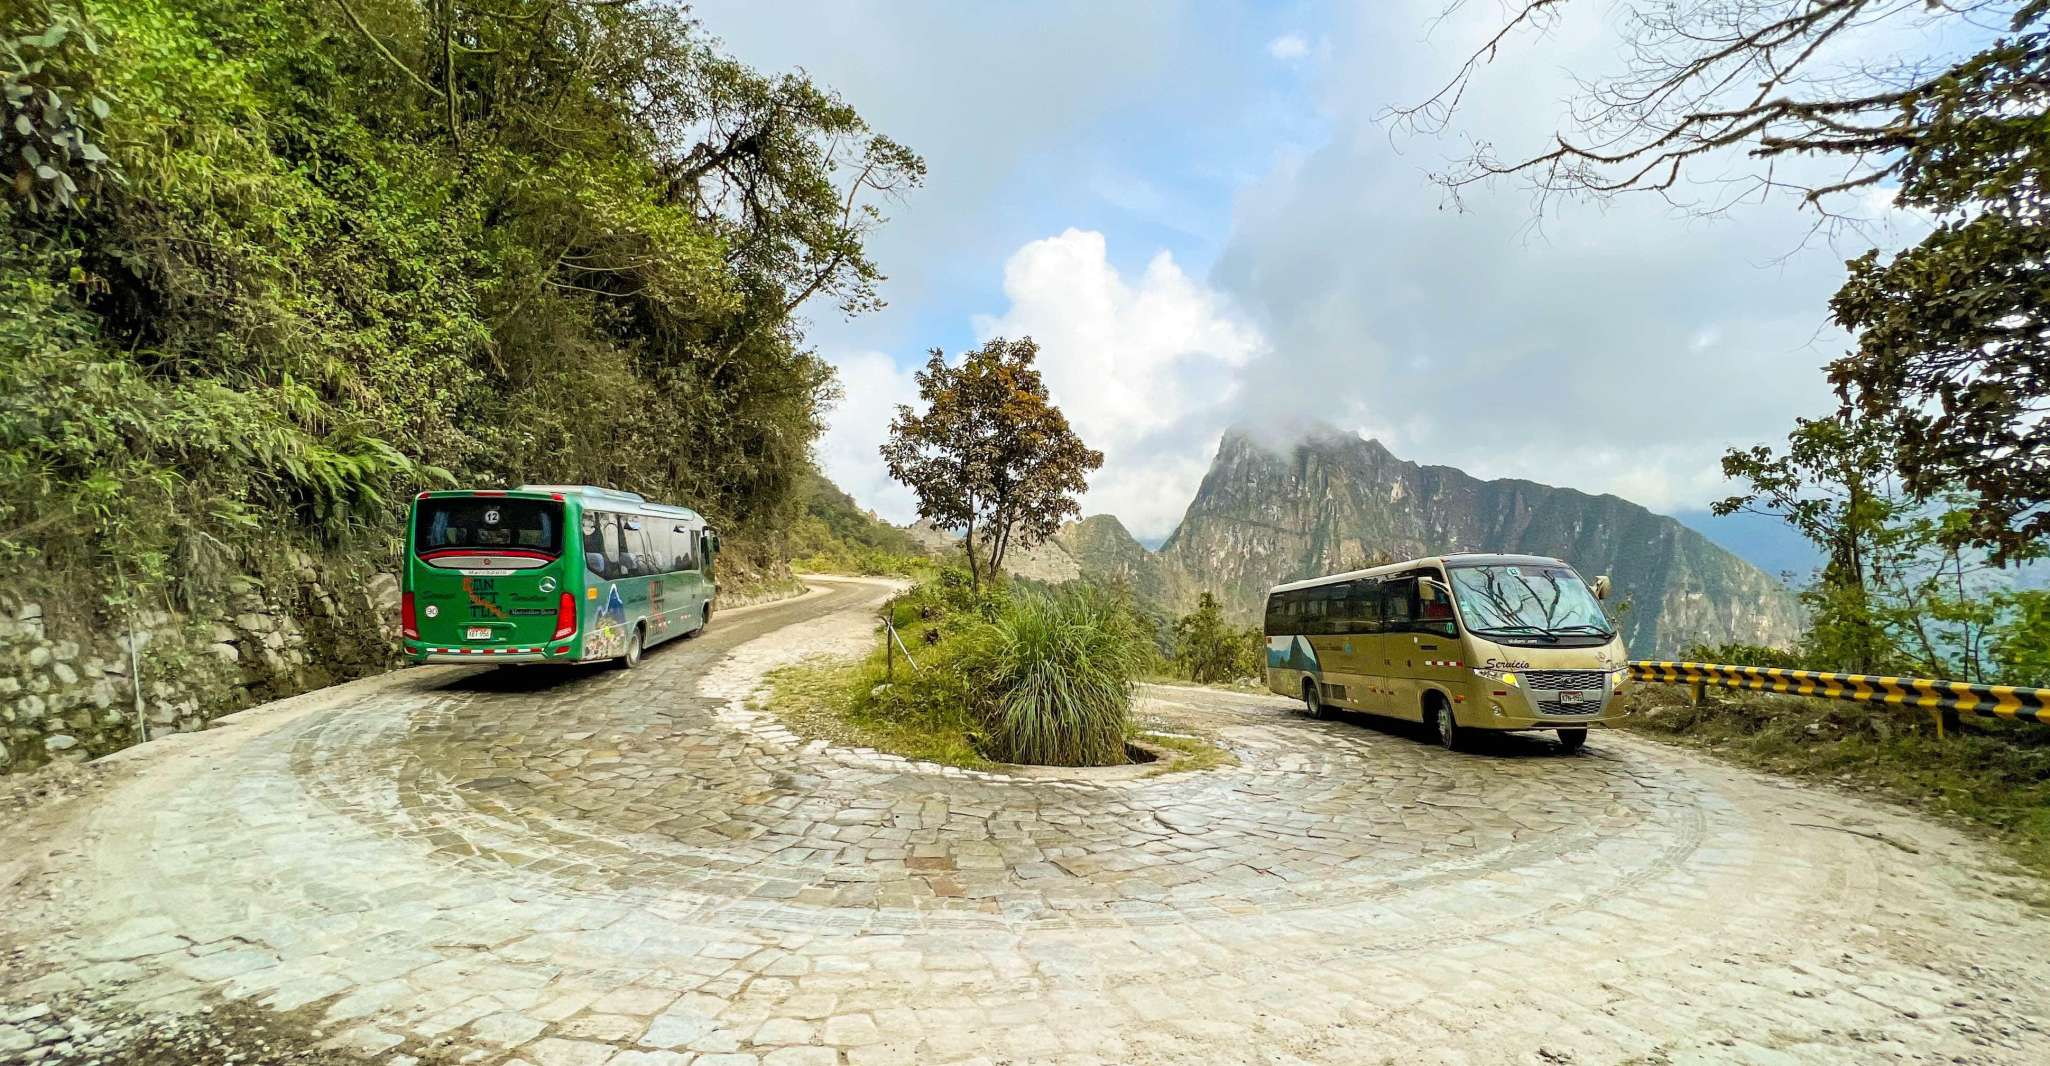 Aguas Calientes, Machu Picchu Official Ticket, Bus, & Guide - Housity